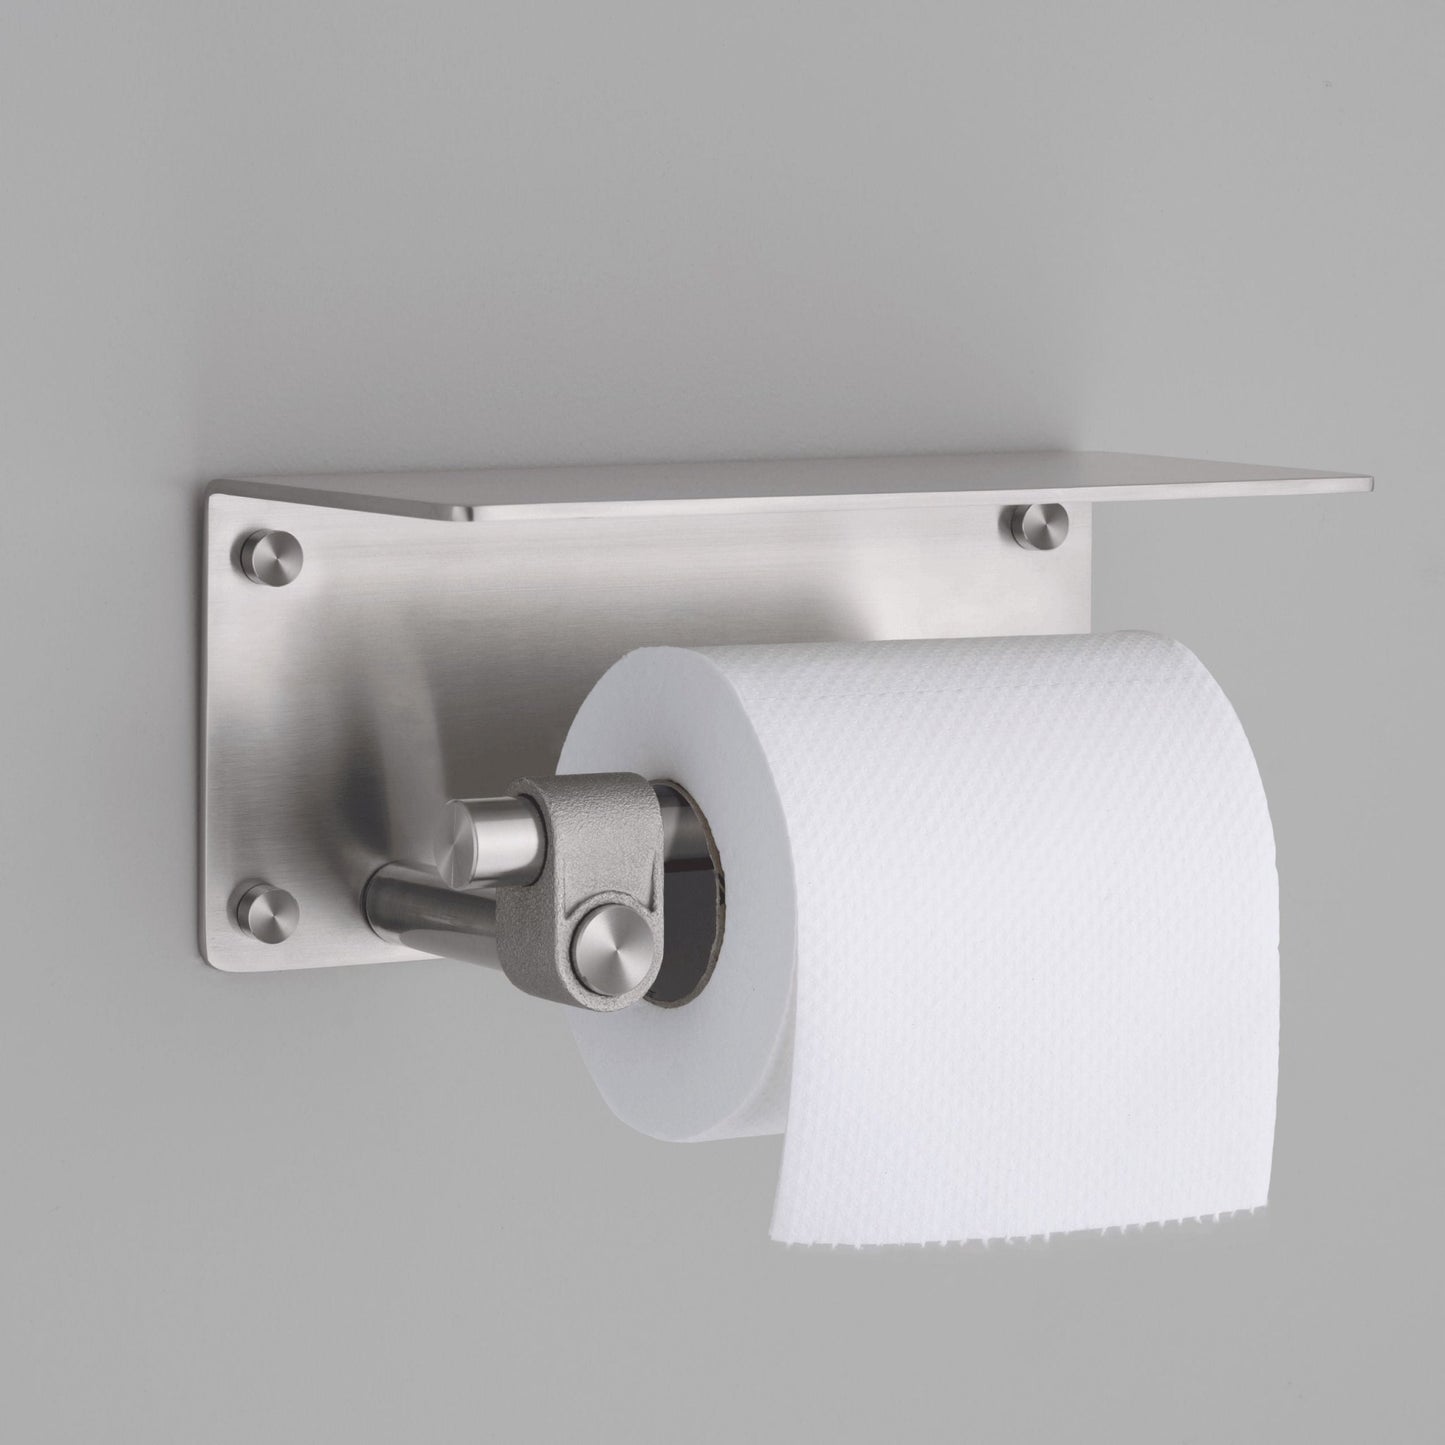 Industrial Toilet Paper Holder STEEL - |VESIMI Design| Luxury and Rustic bathrooms online